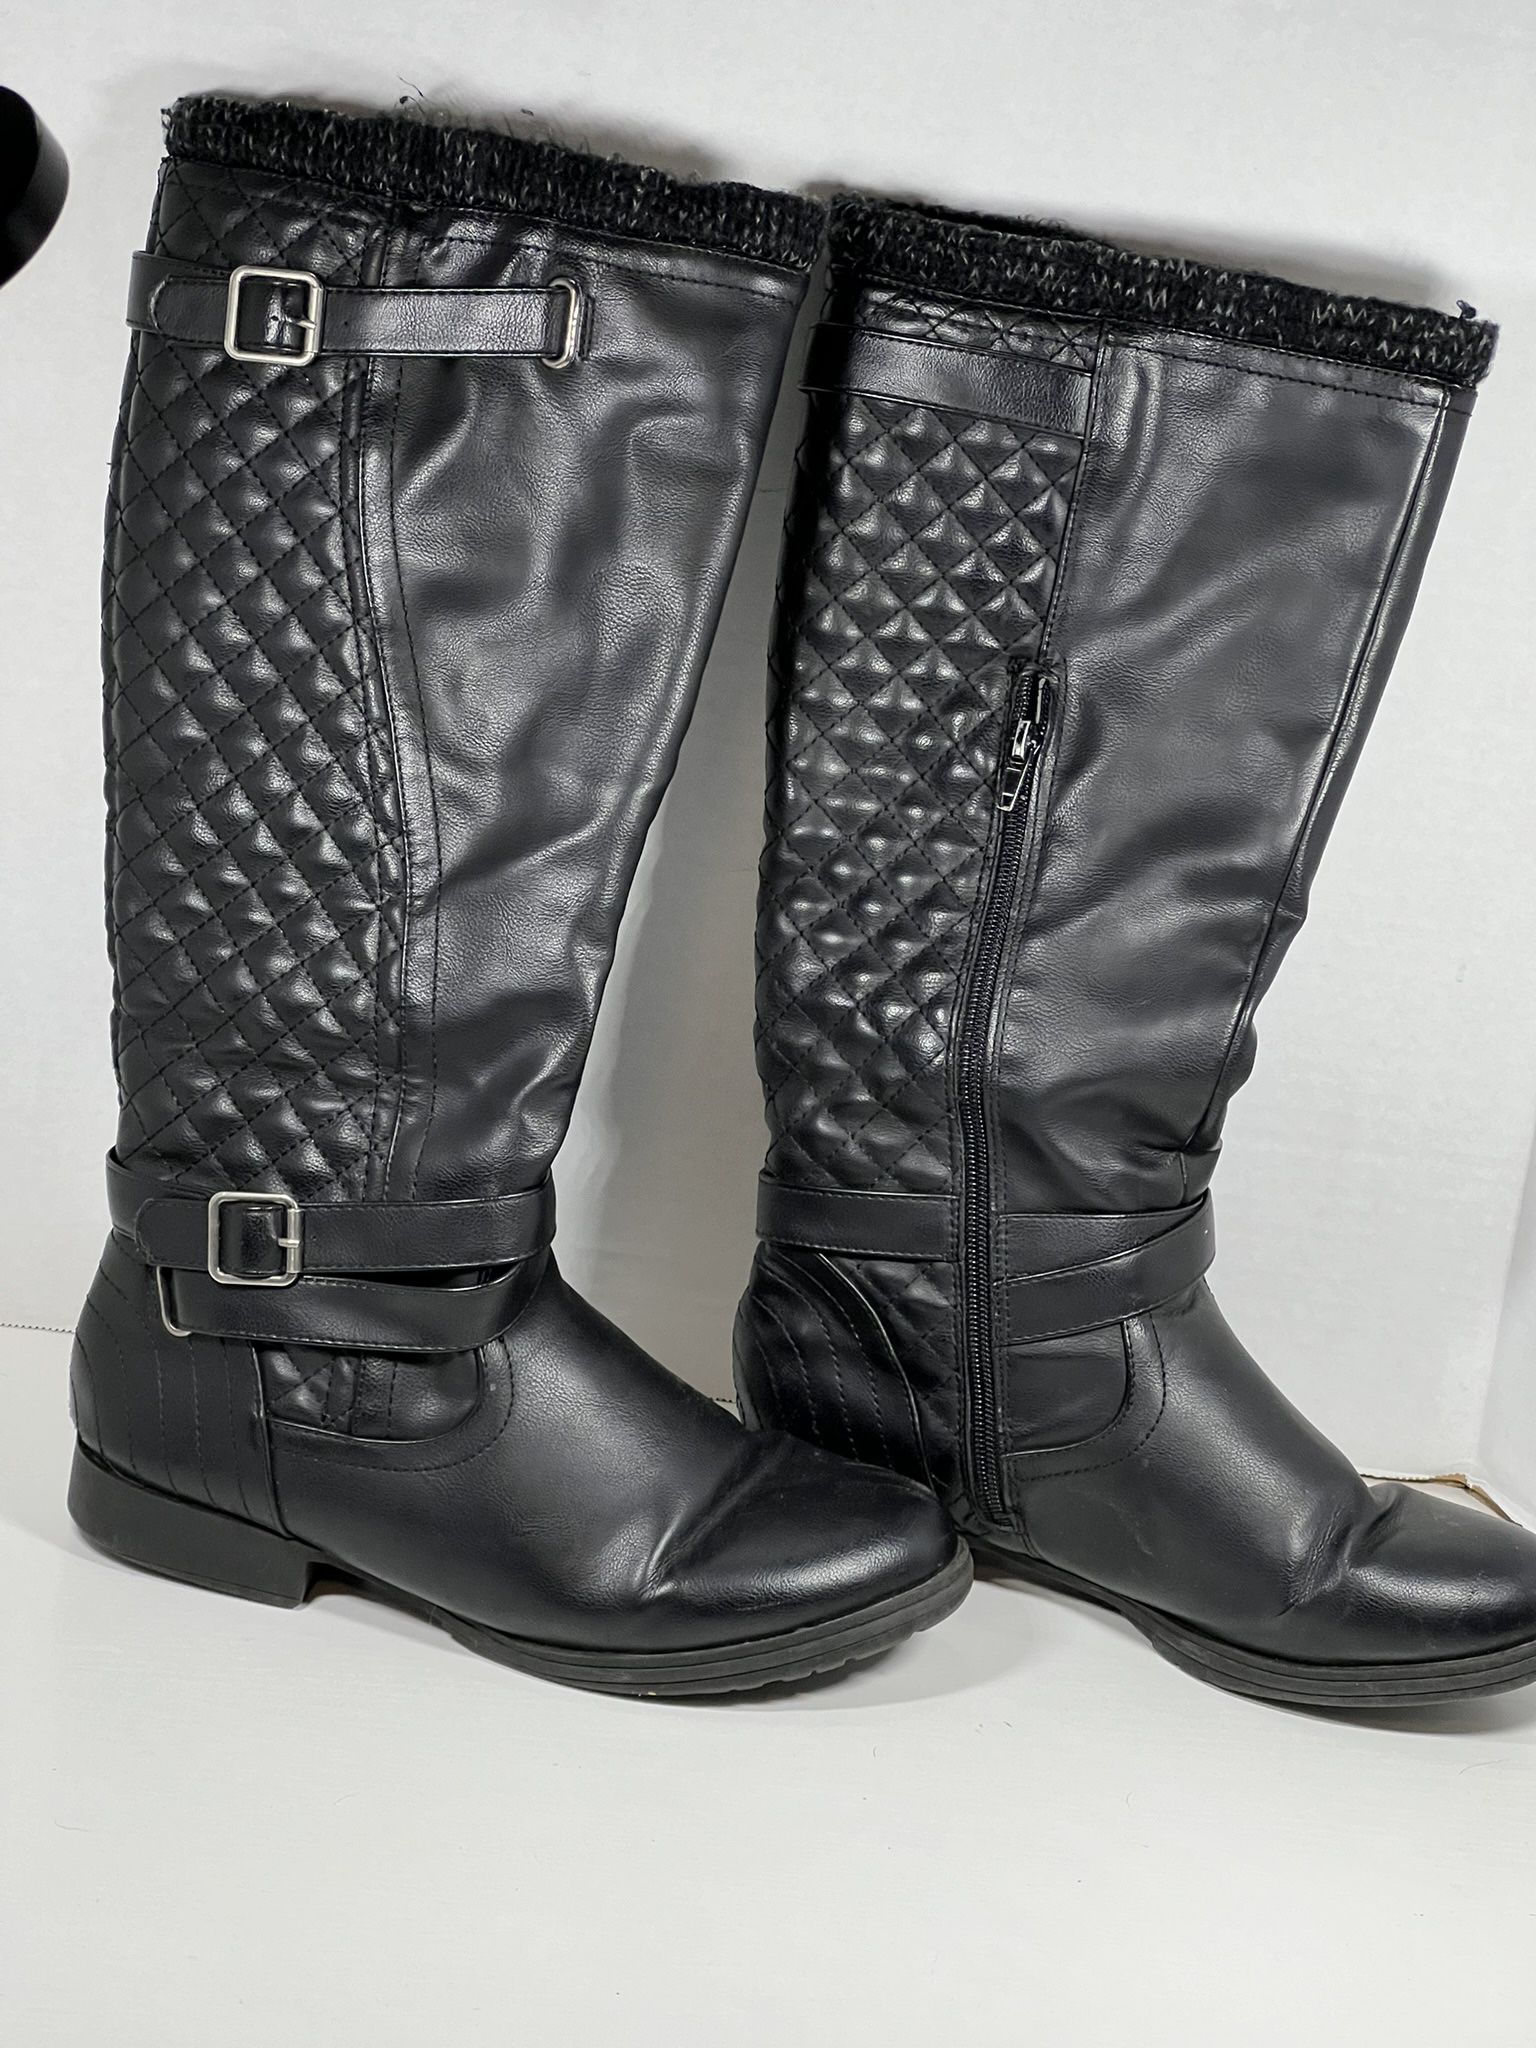 Women's Midcalf Boots Size 9 Black